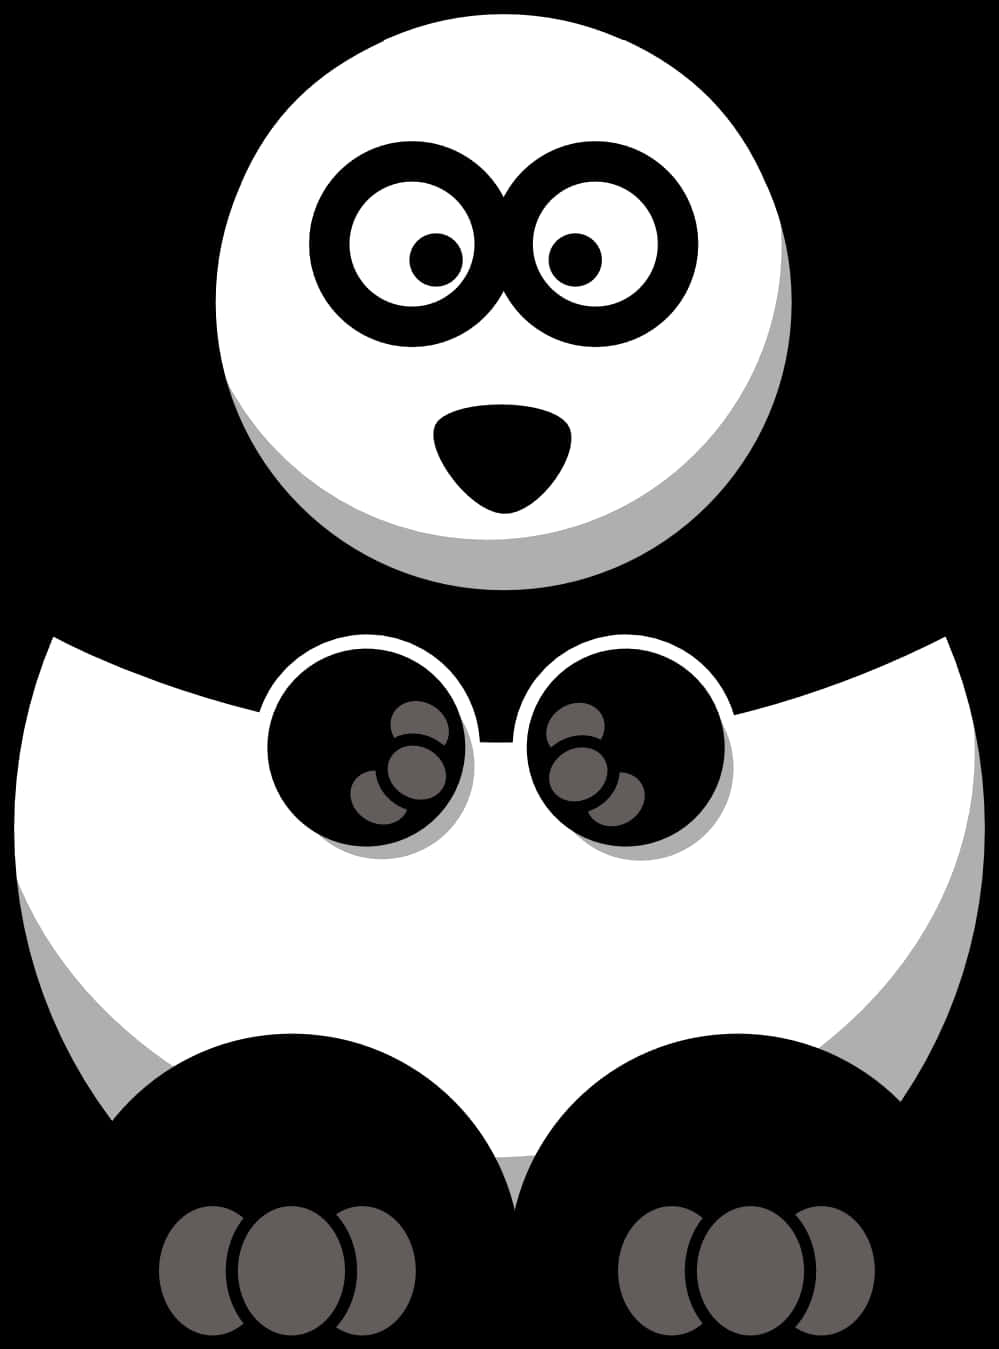 Abstract Panda Graphic PNG image